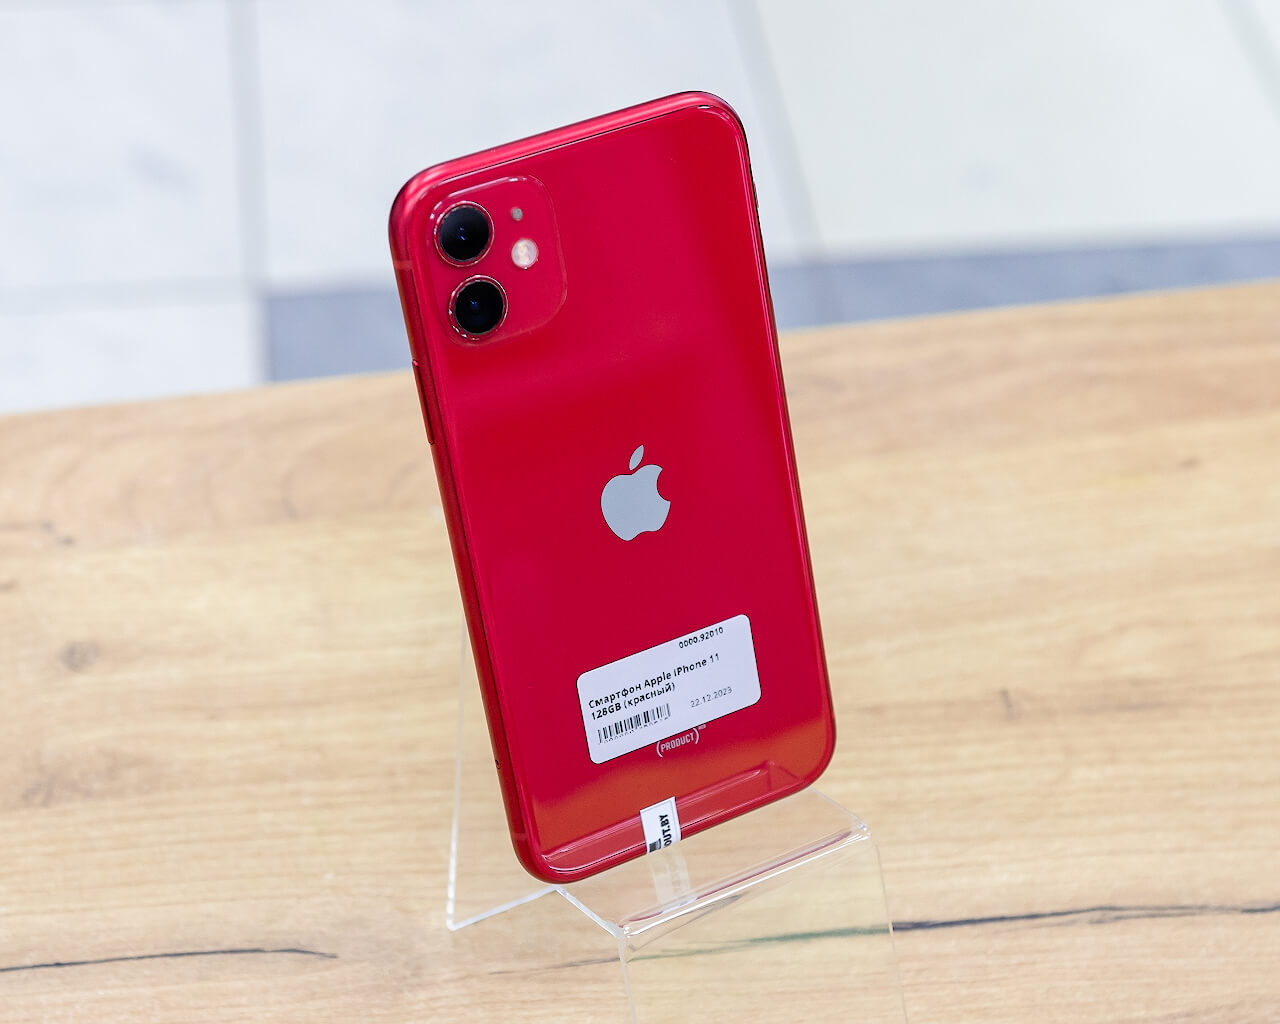 Смартфон Apple iPhone 11 128GB (красный)